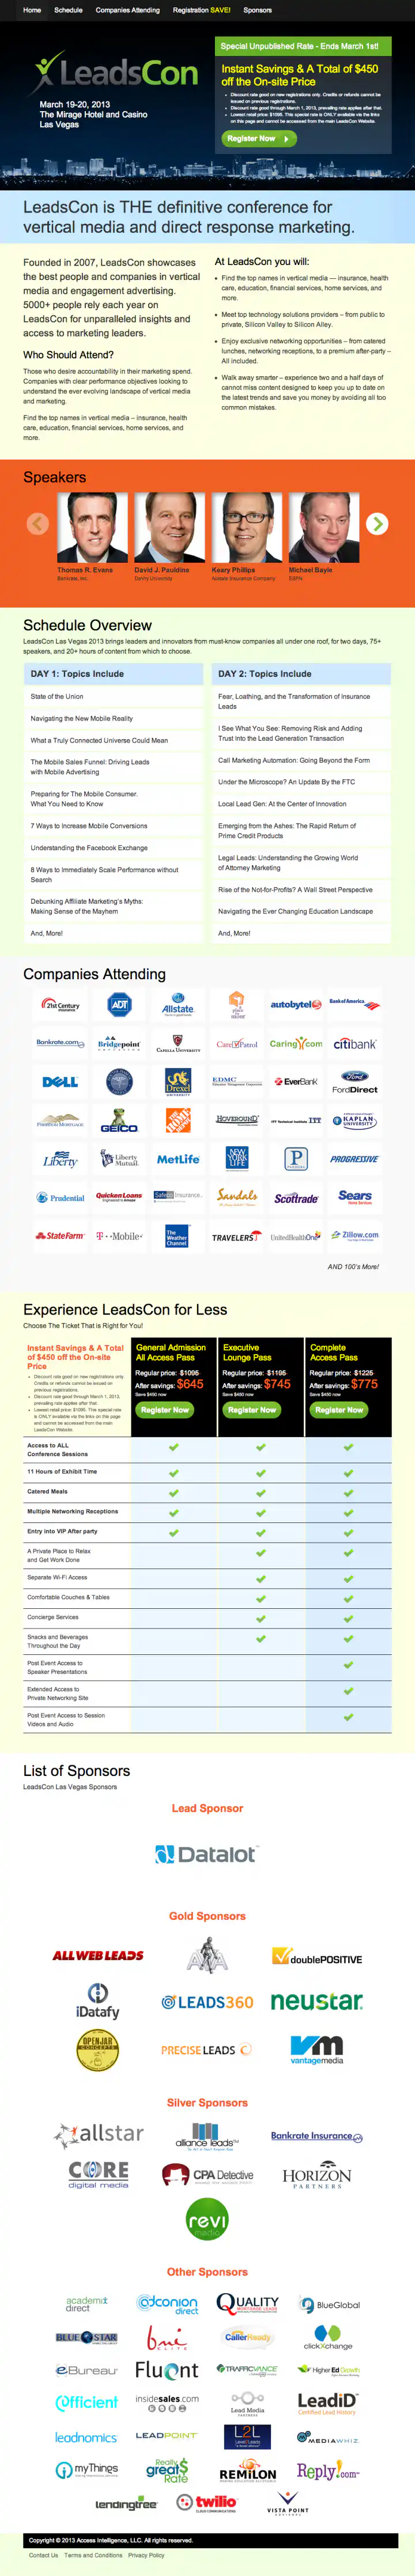 LeadsCon Landing Page Creator - Las Vegas Event Example